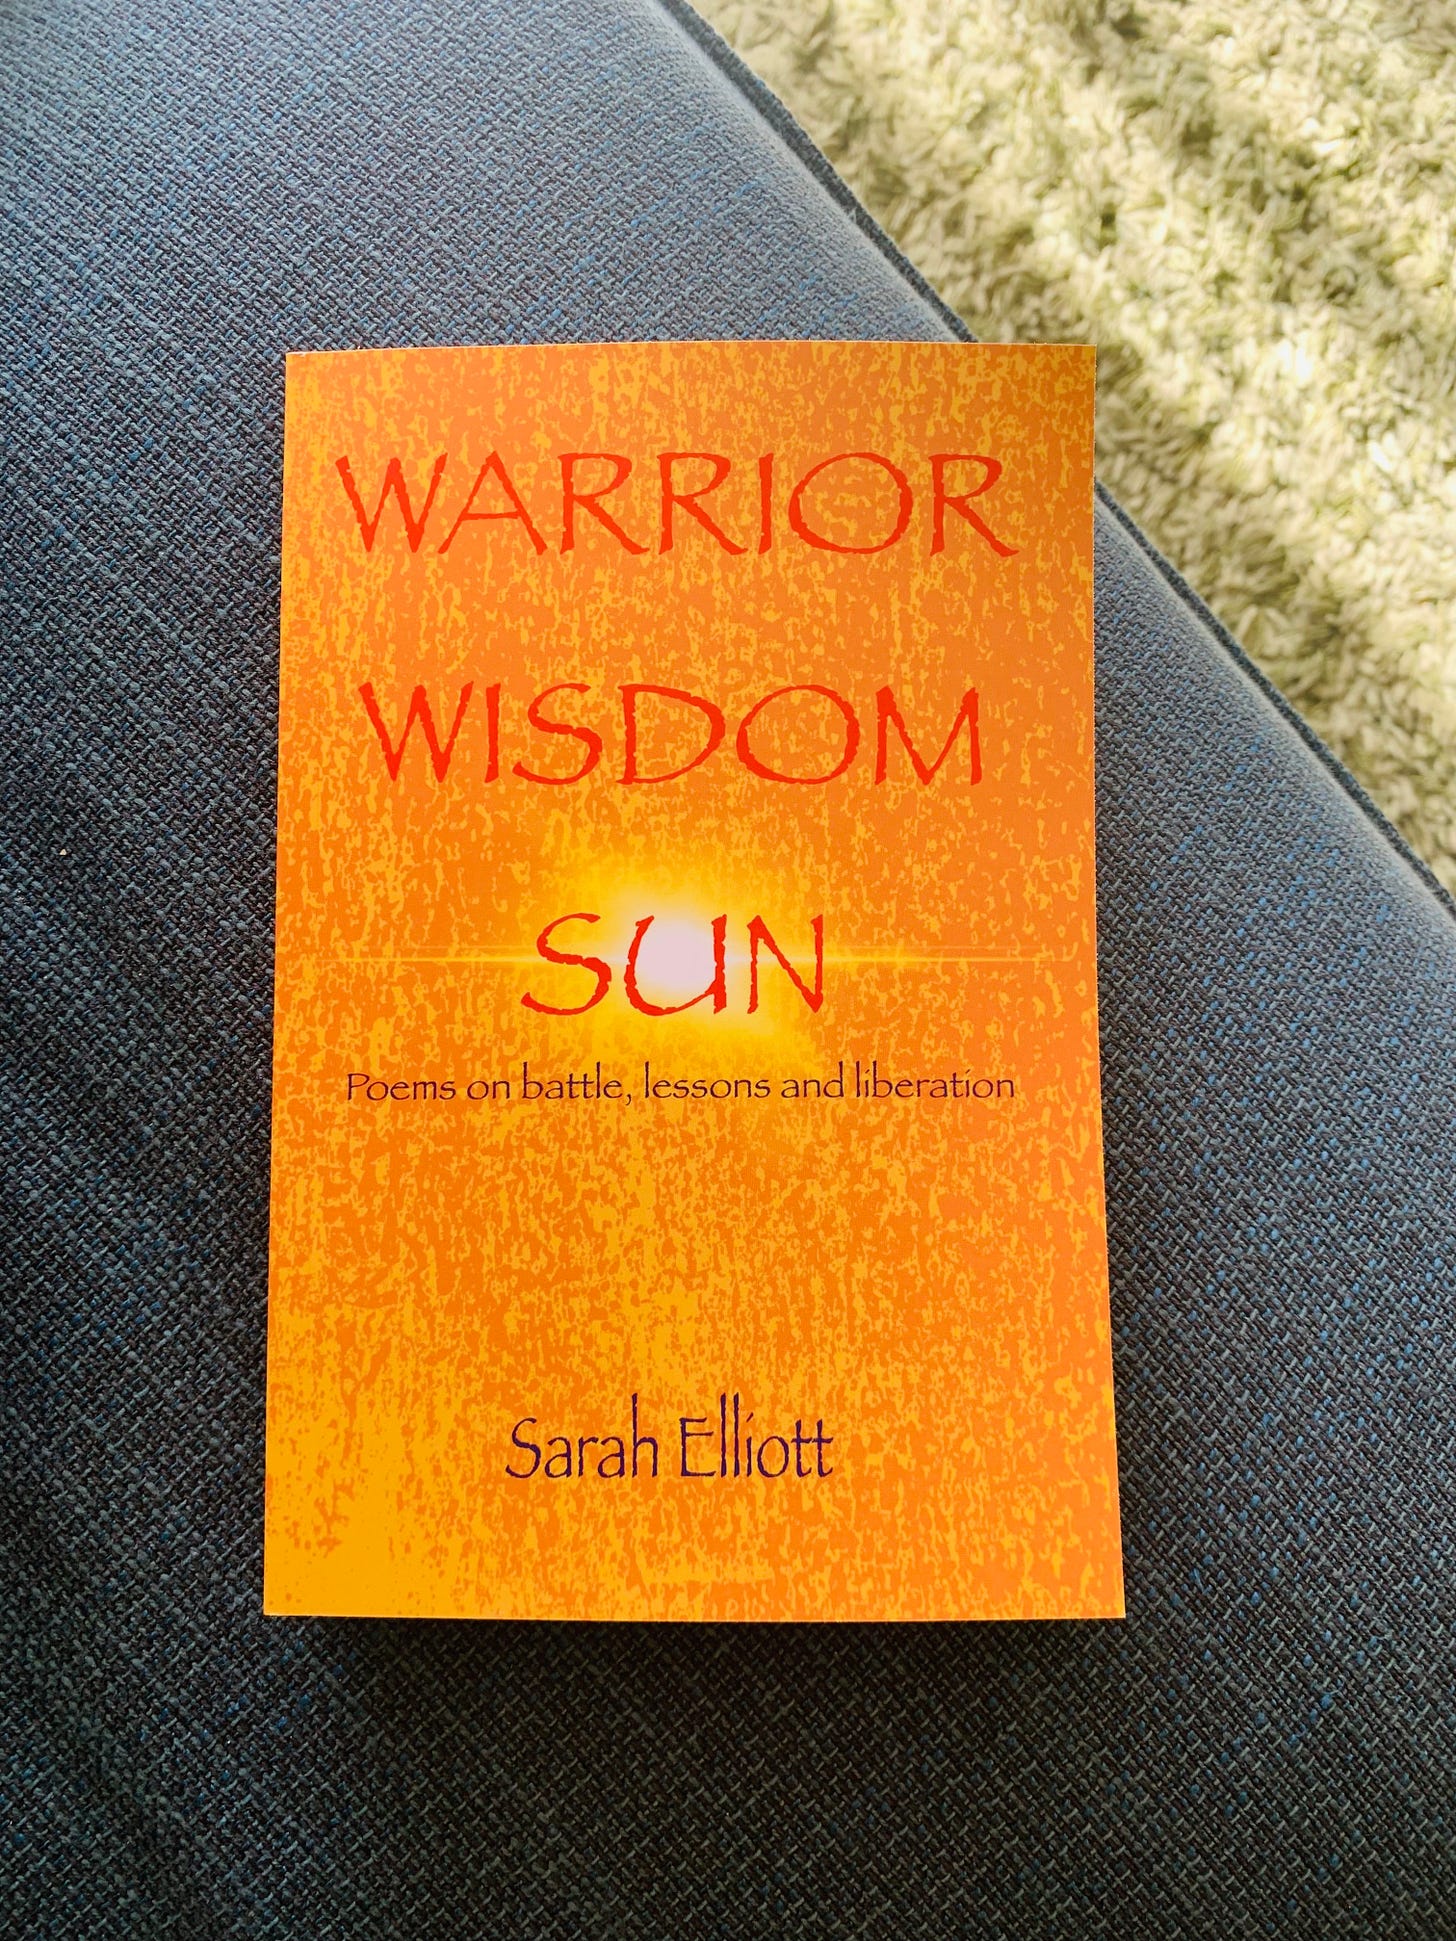 Book entitled Warrior Wisdom Sun placed on sofa